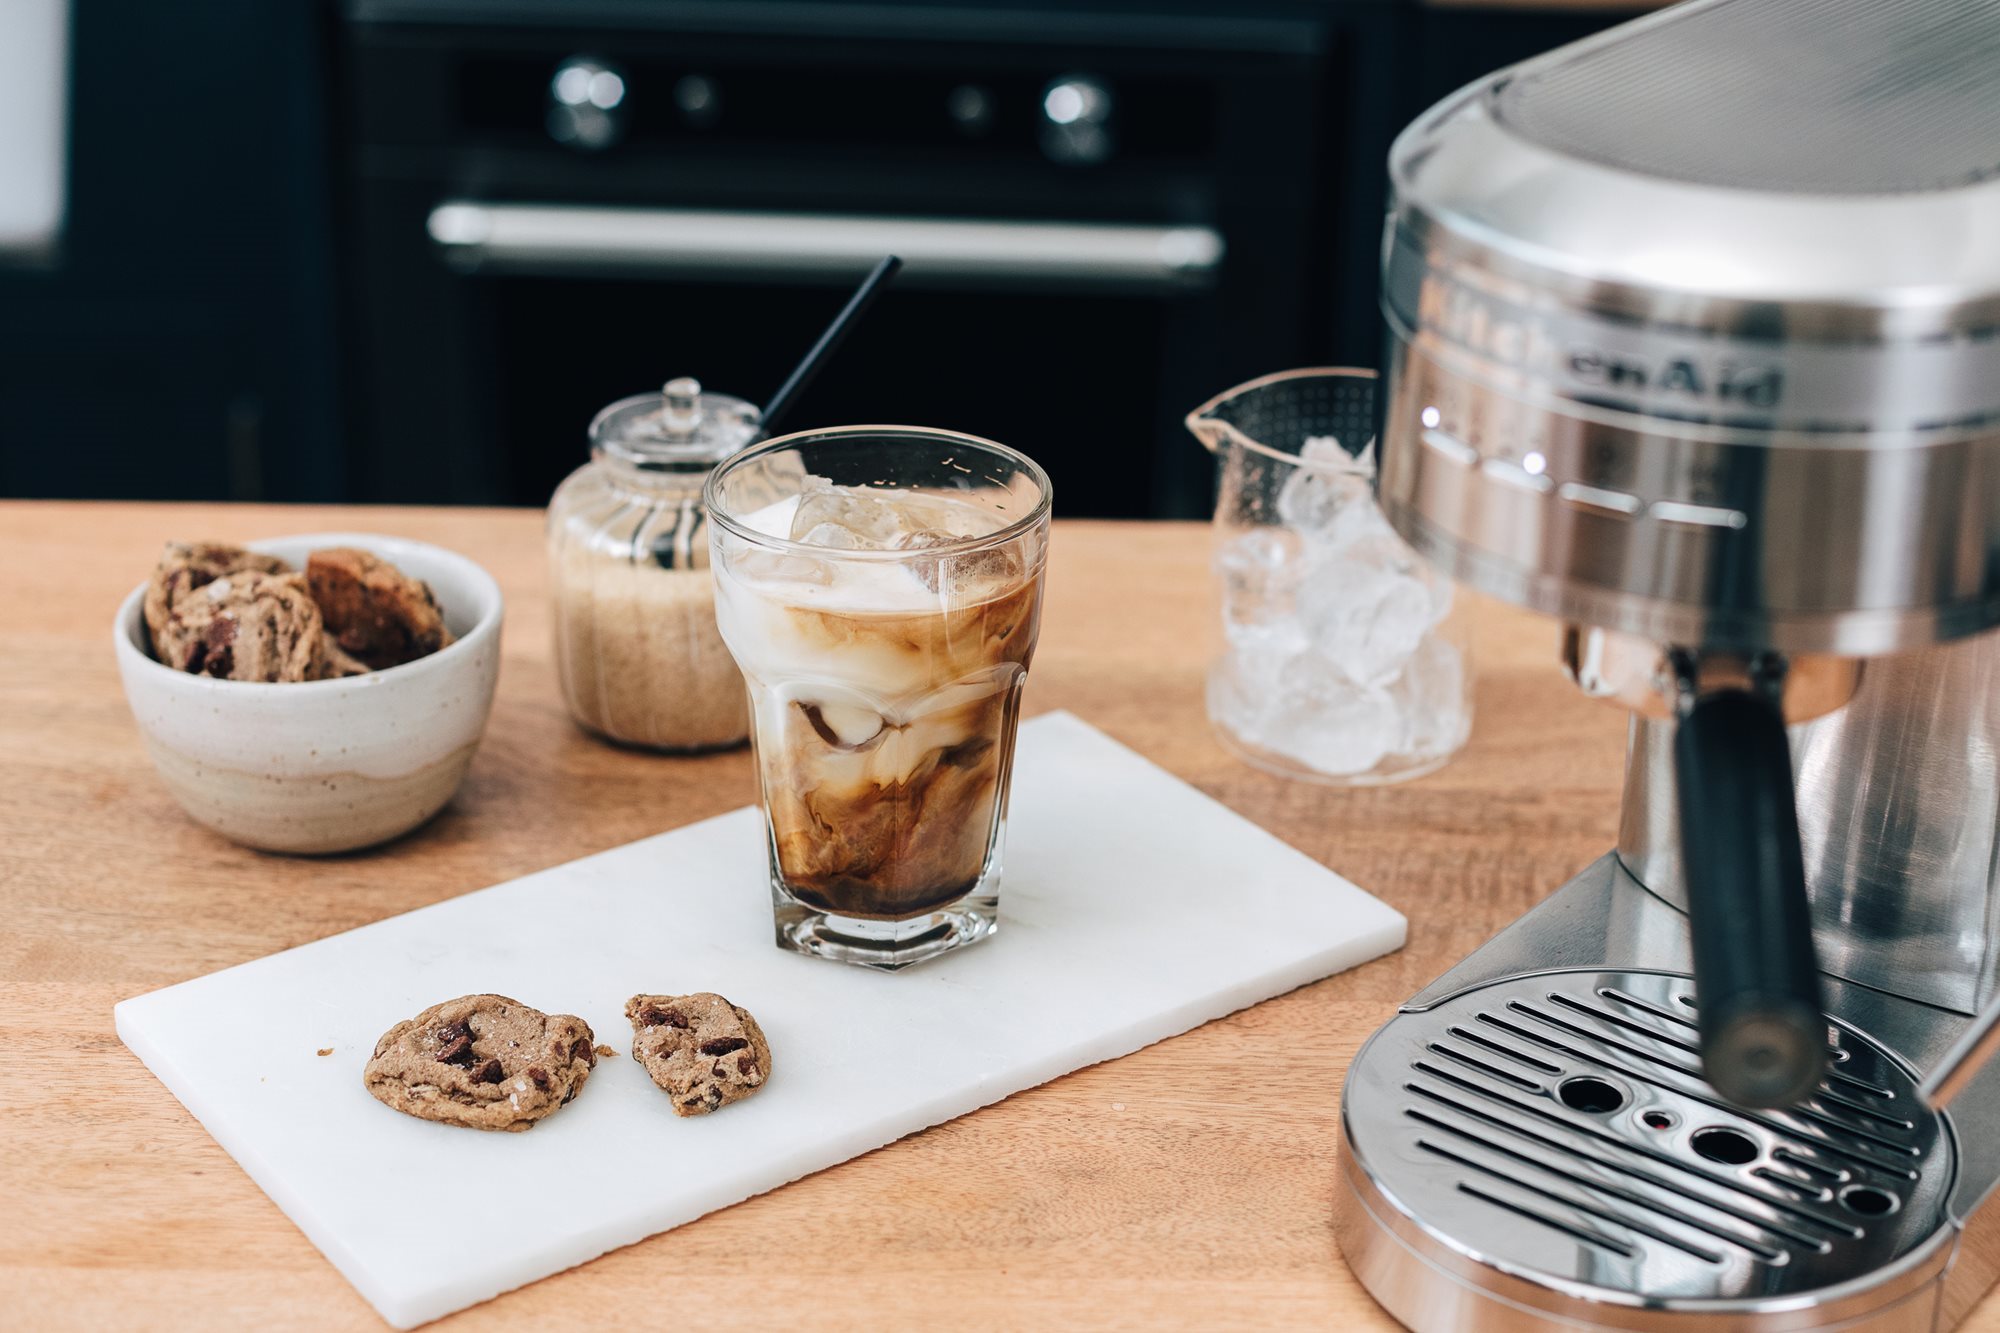 Artisan electric espresso machine, 1470W, Almond Cream color -  KitchenAid brand